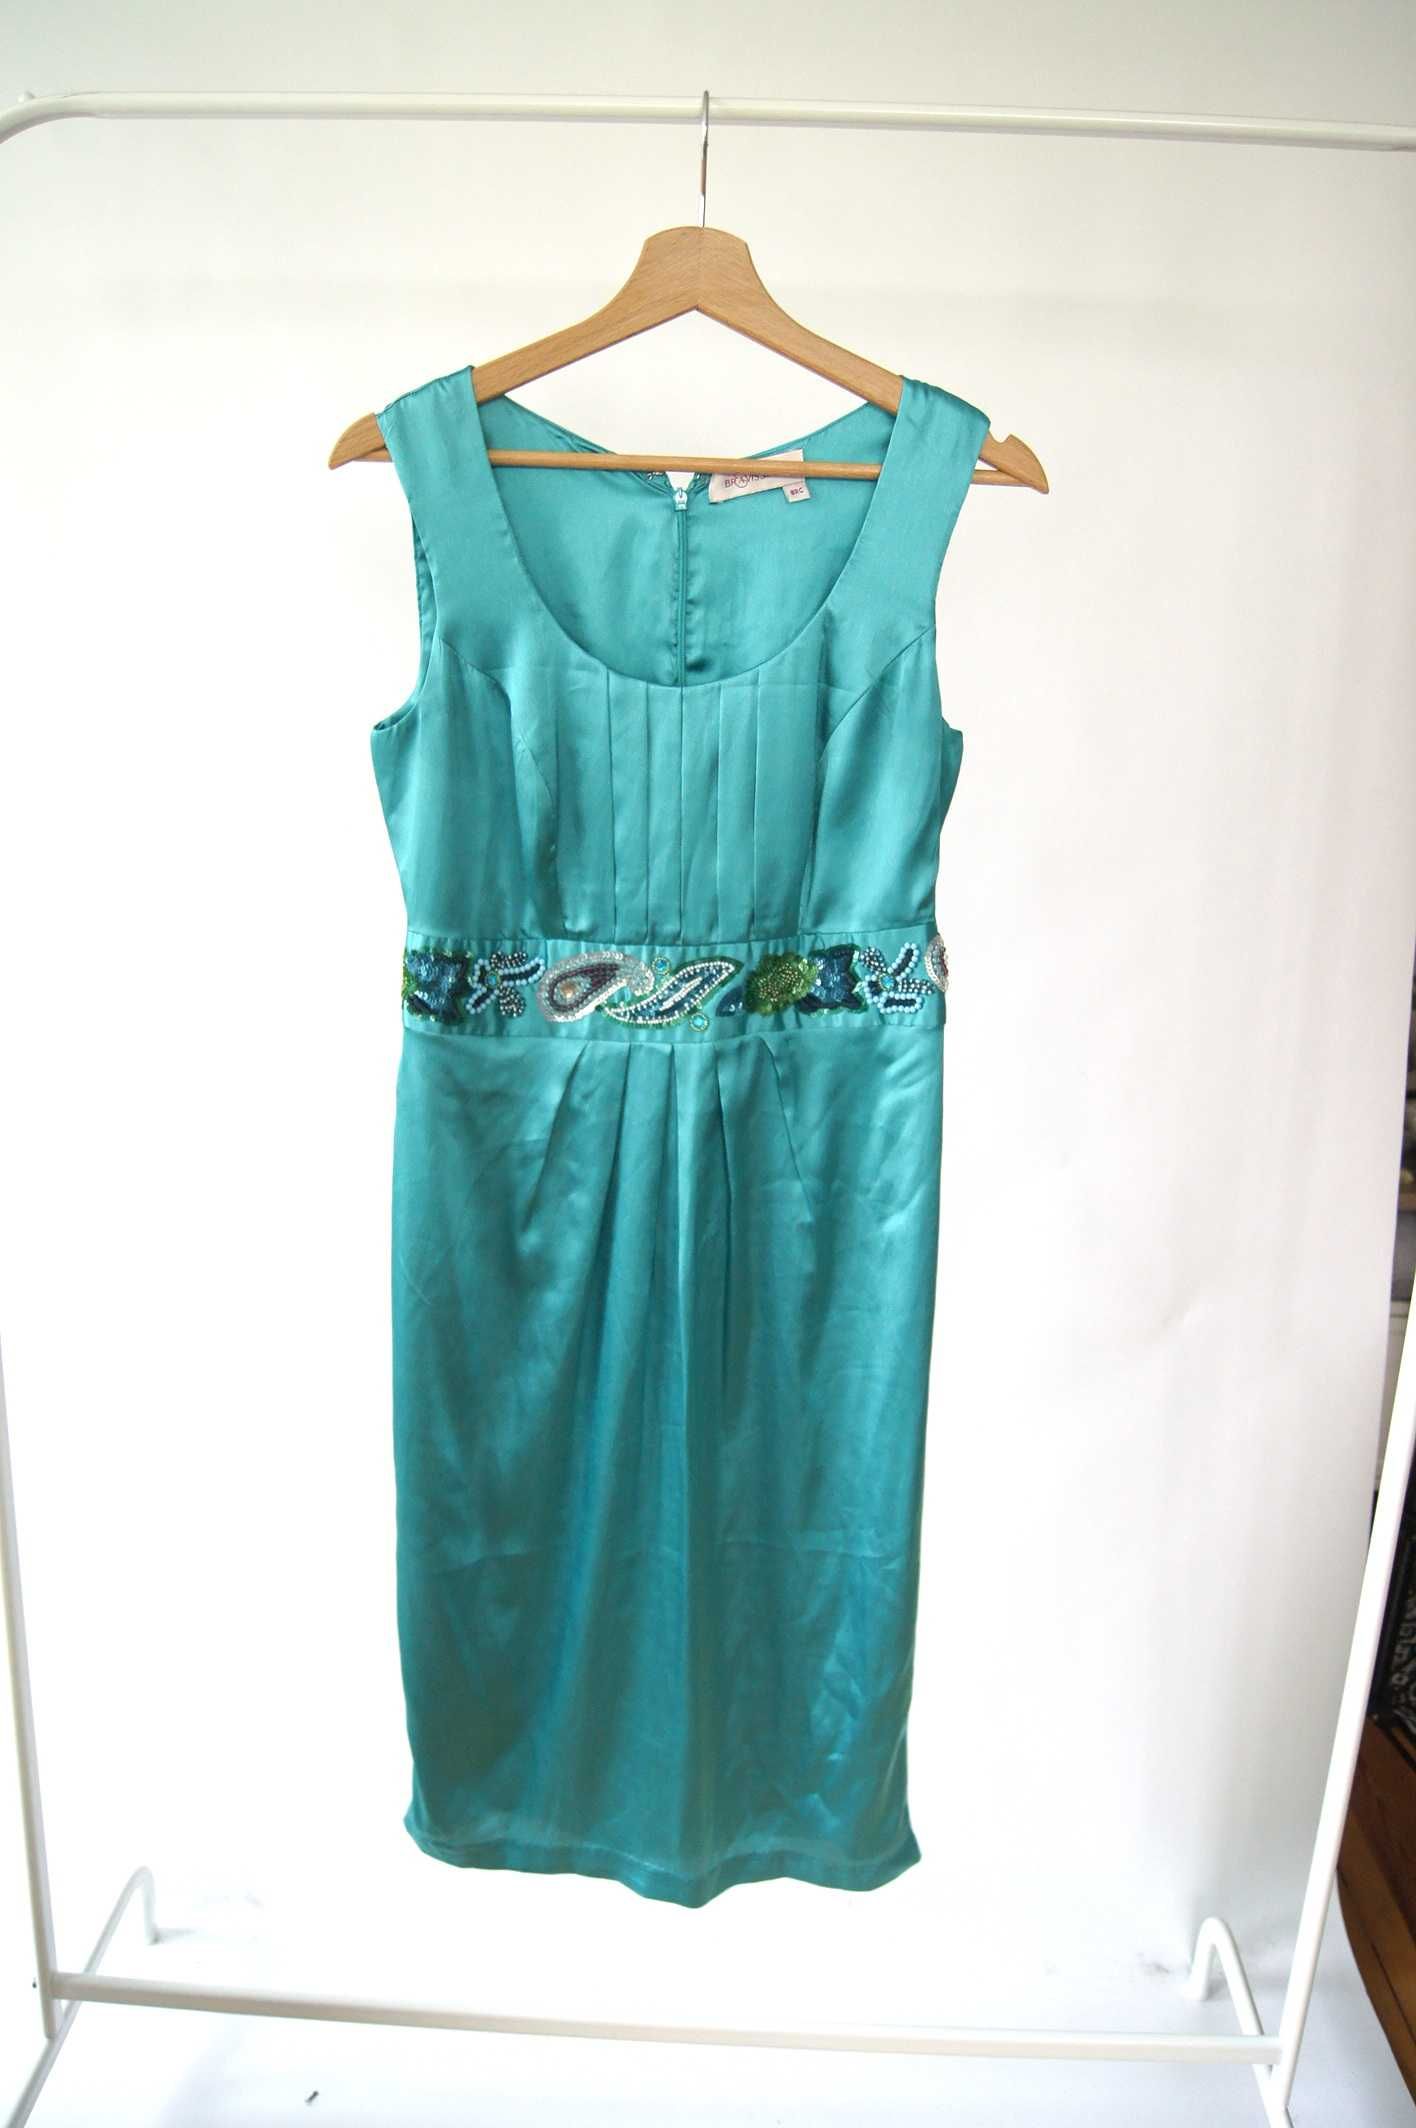 jasnozielona morska turkusowa śliska lśniąca sukienka prosta S M mięta